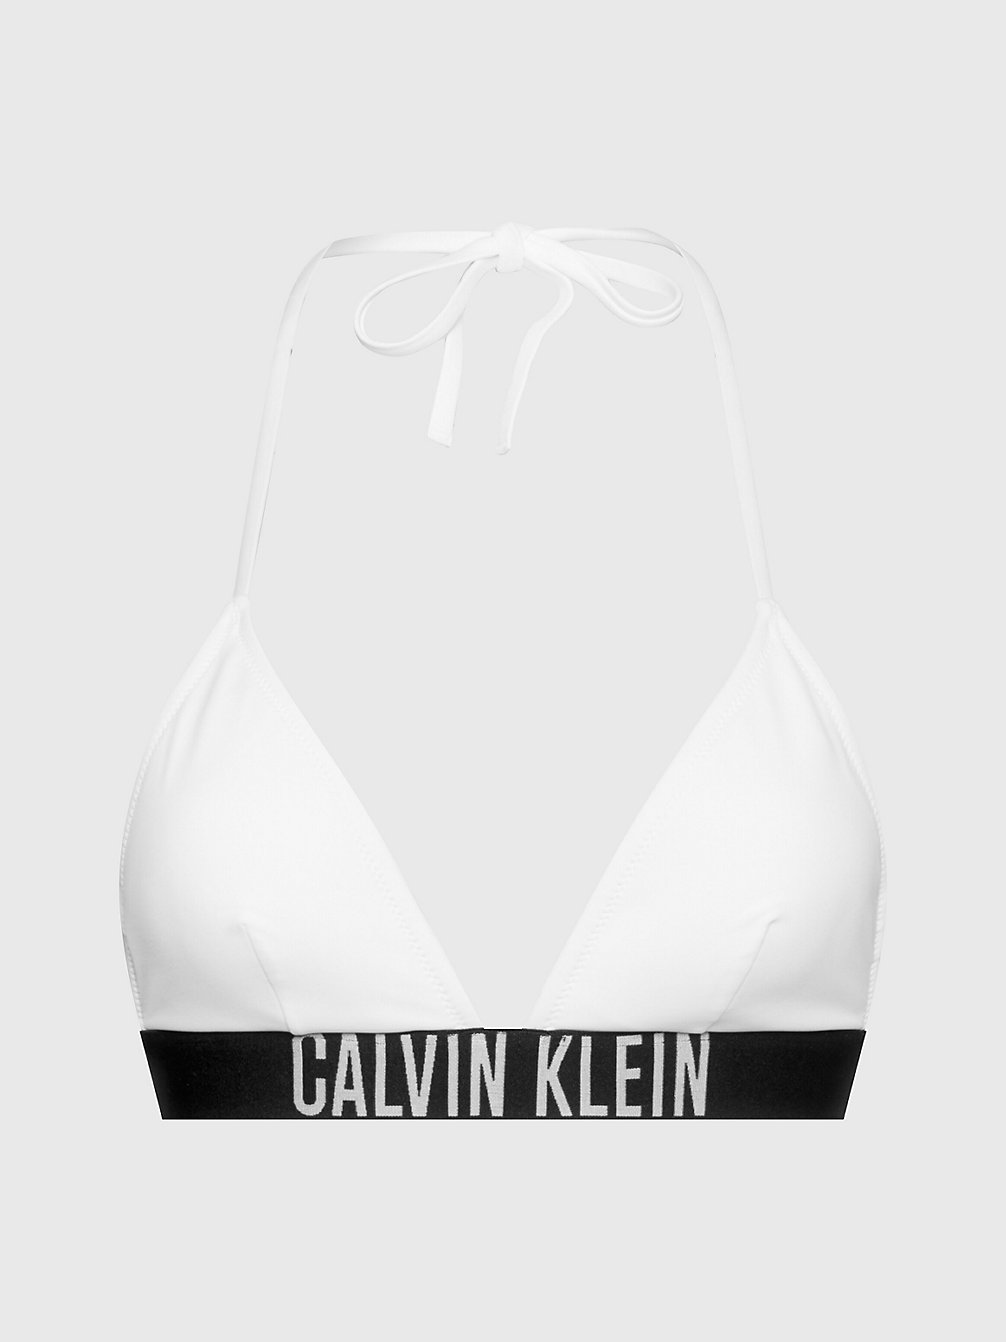 Top Bikini A Triangolo - Intense Power > PVH CLASSIC WHITE > undefined donna > Calvin Klein